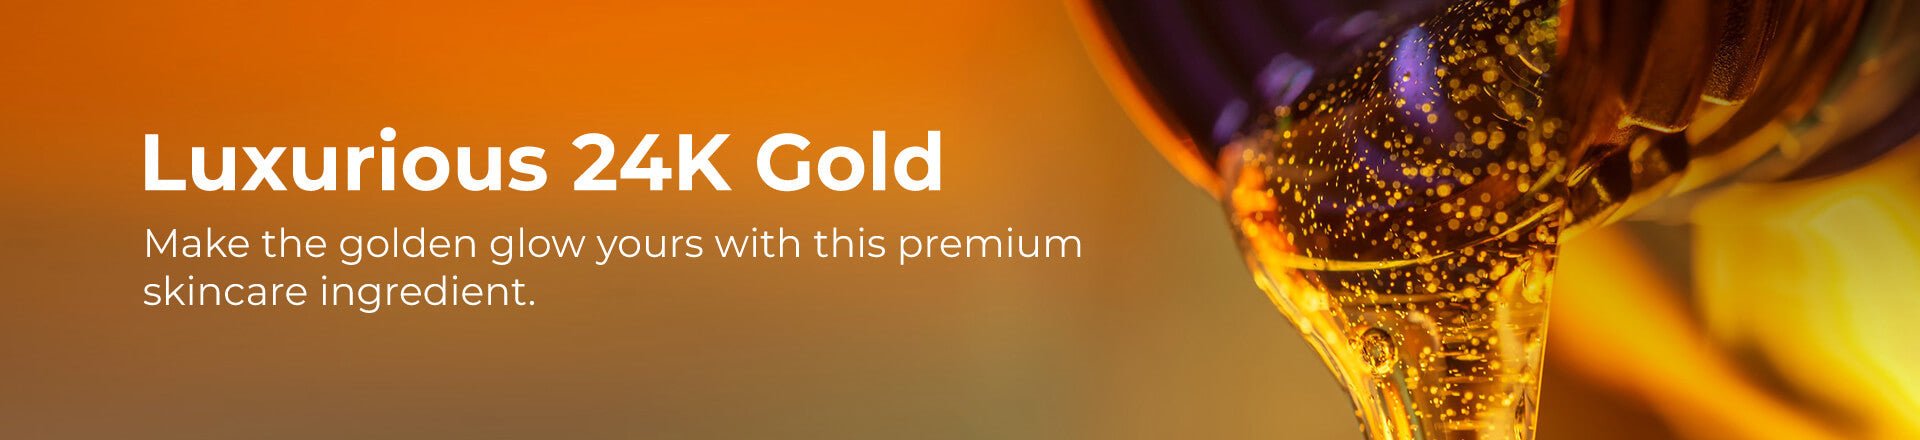 Luxurious 24K Gold | Pilgrim India